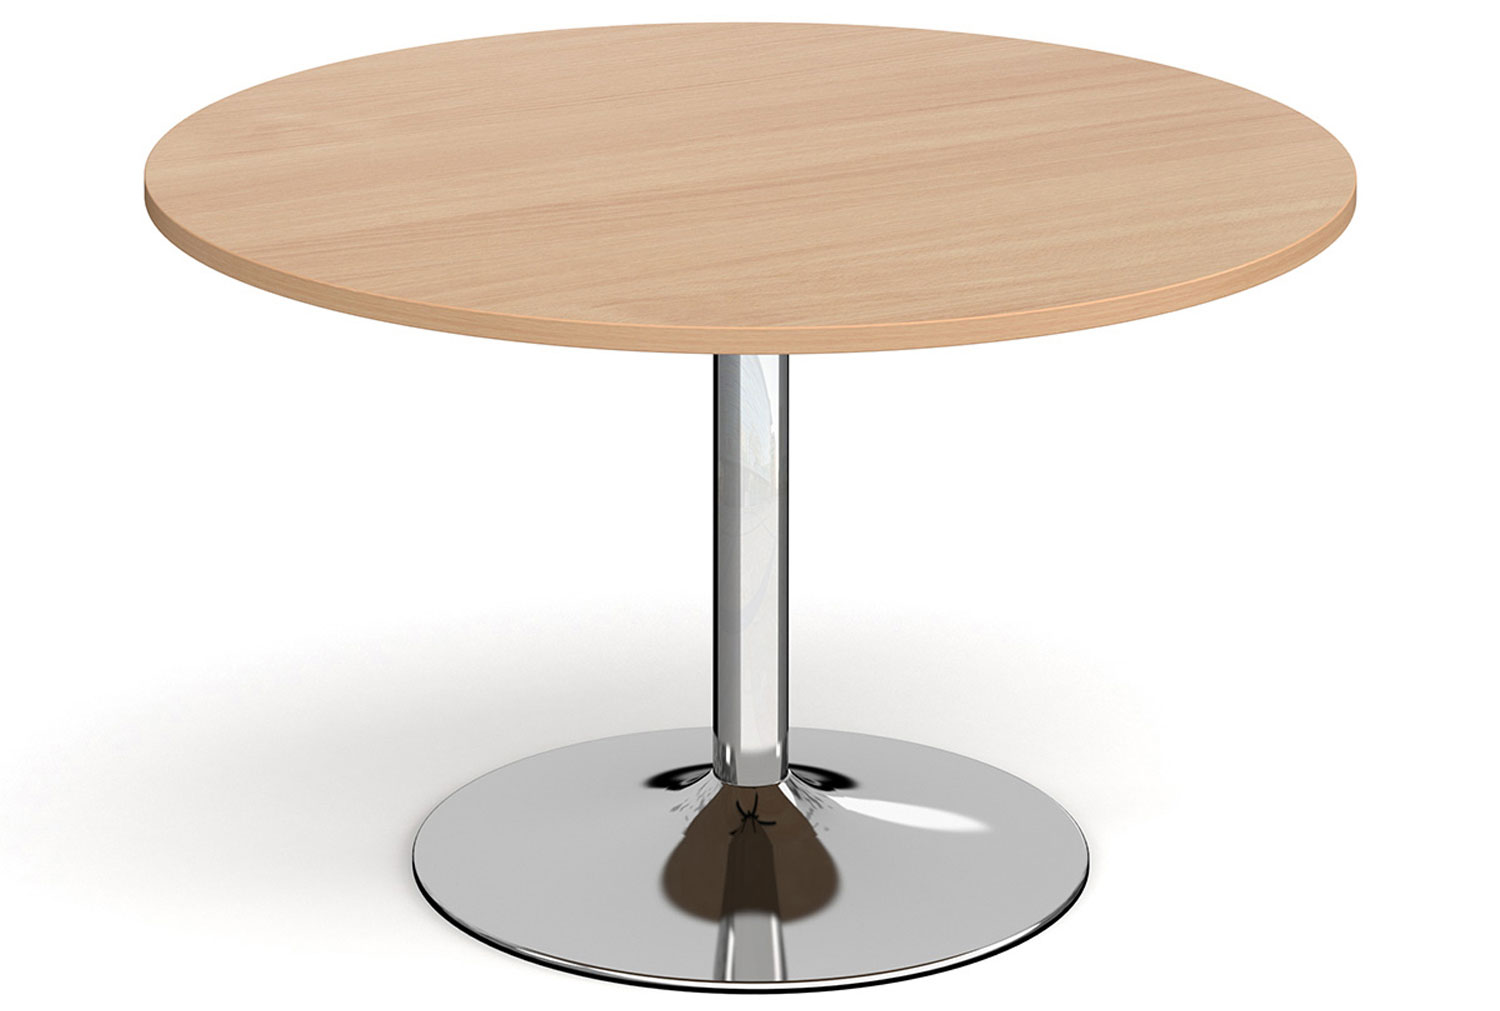 Babstock Round Boardroom Table, 120diax73h (cm), Beech